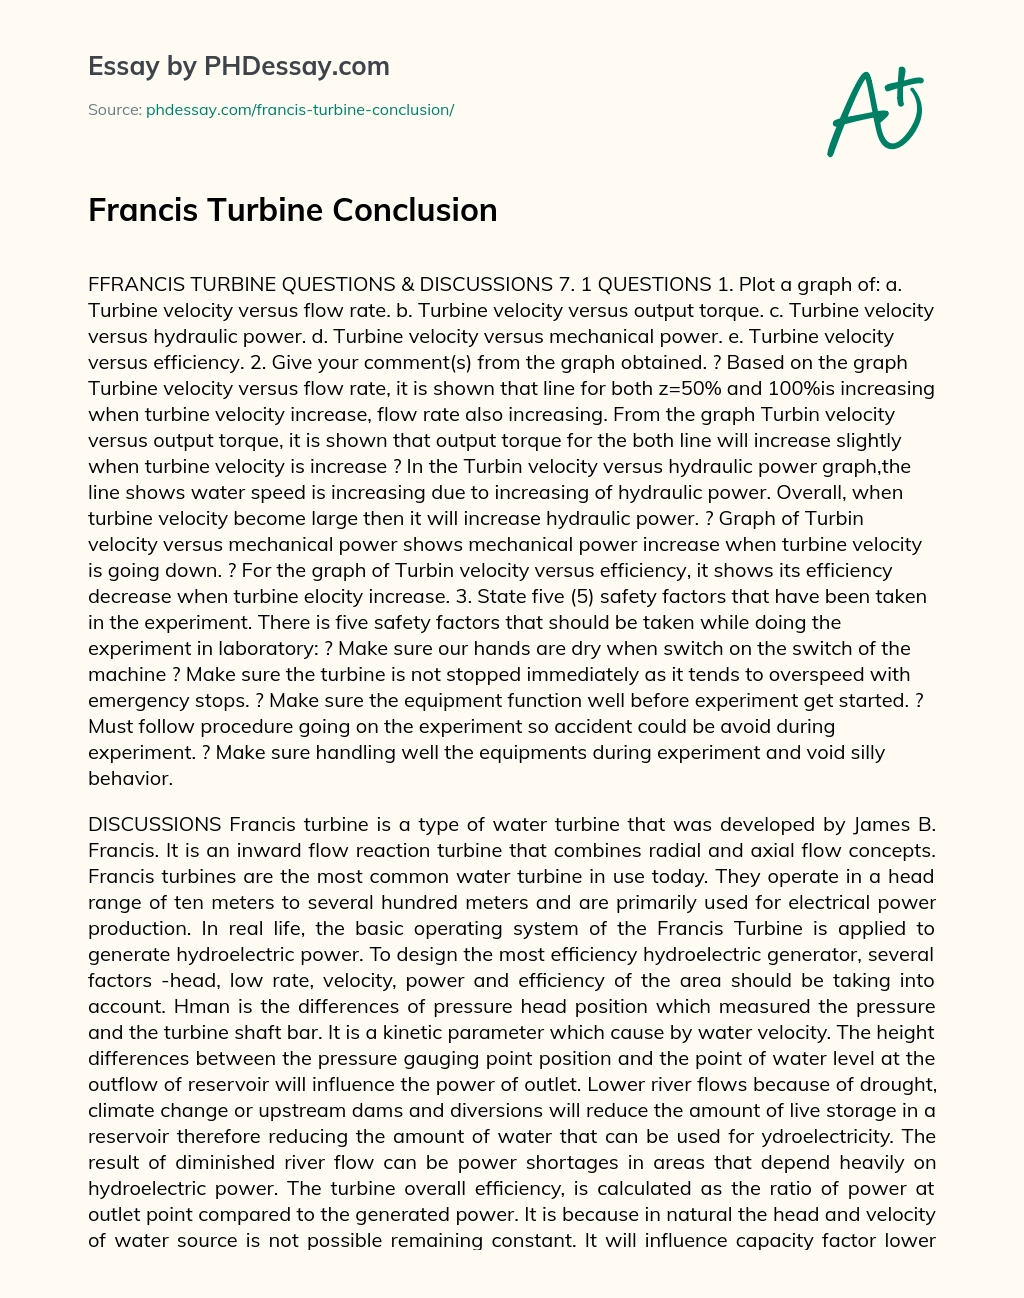 Francis Turbine Conclusion essay